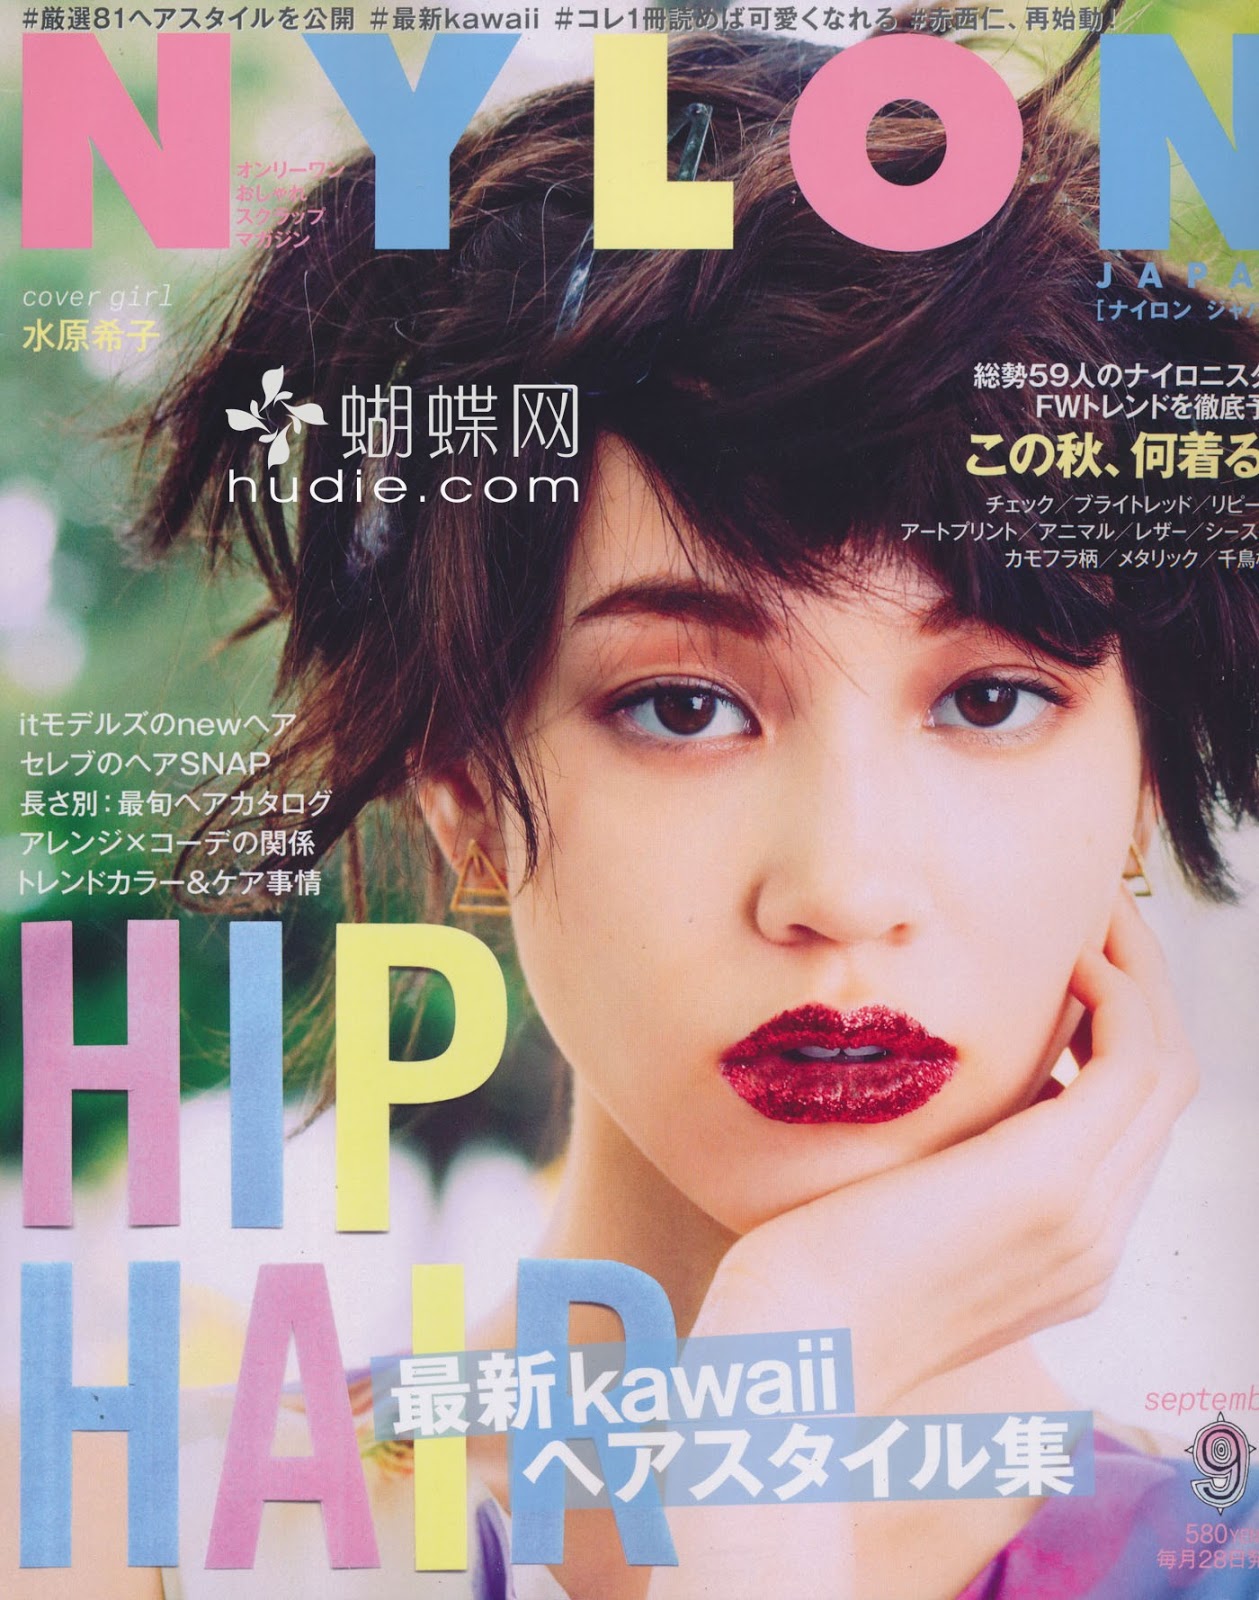 Japan обложка. Japan Magazine. Japanese Magazine.